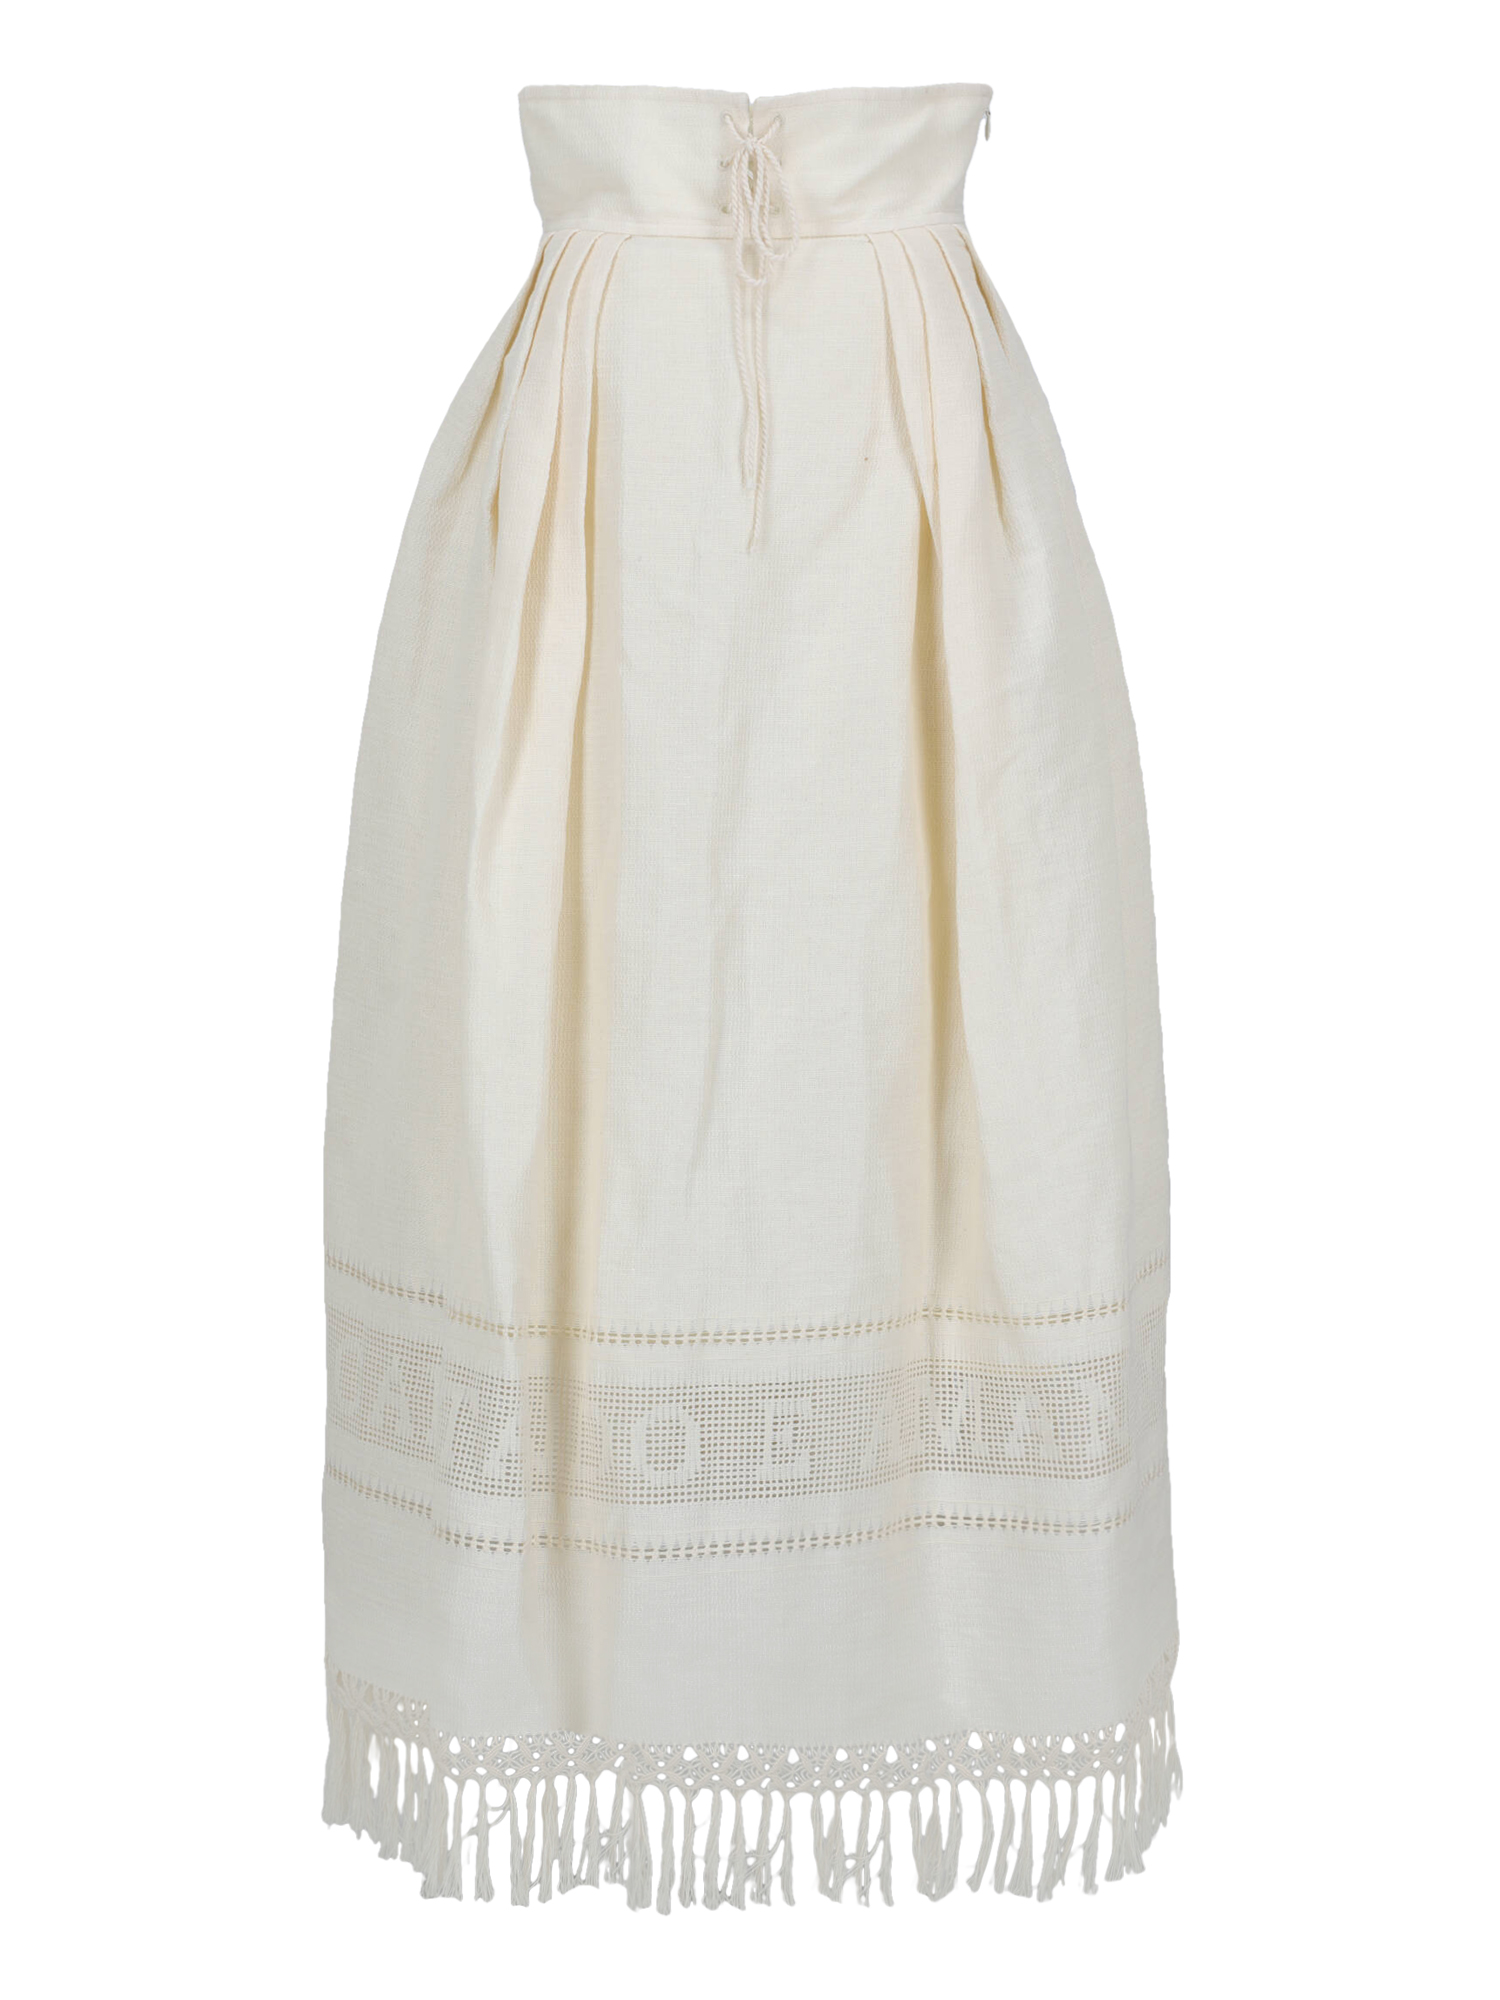 Jupes Pour Femme - Dior - En Eco-Friendly Fabric White - Taille:  -